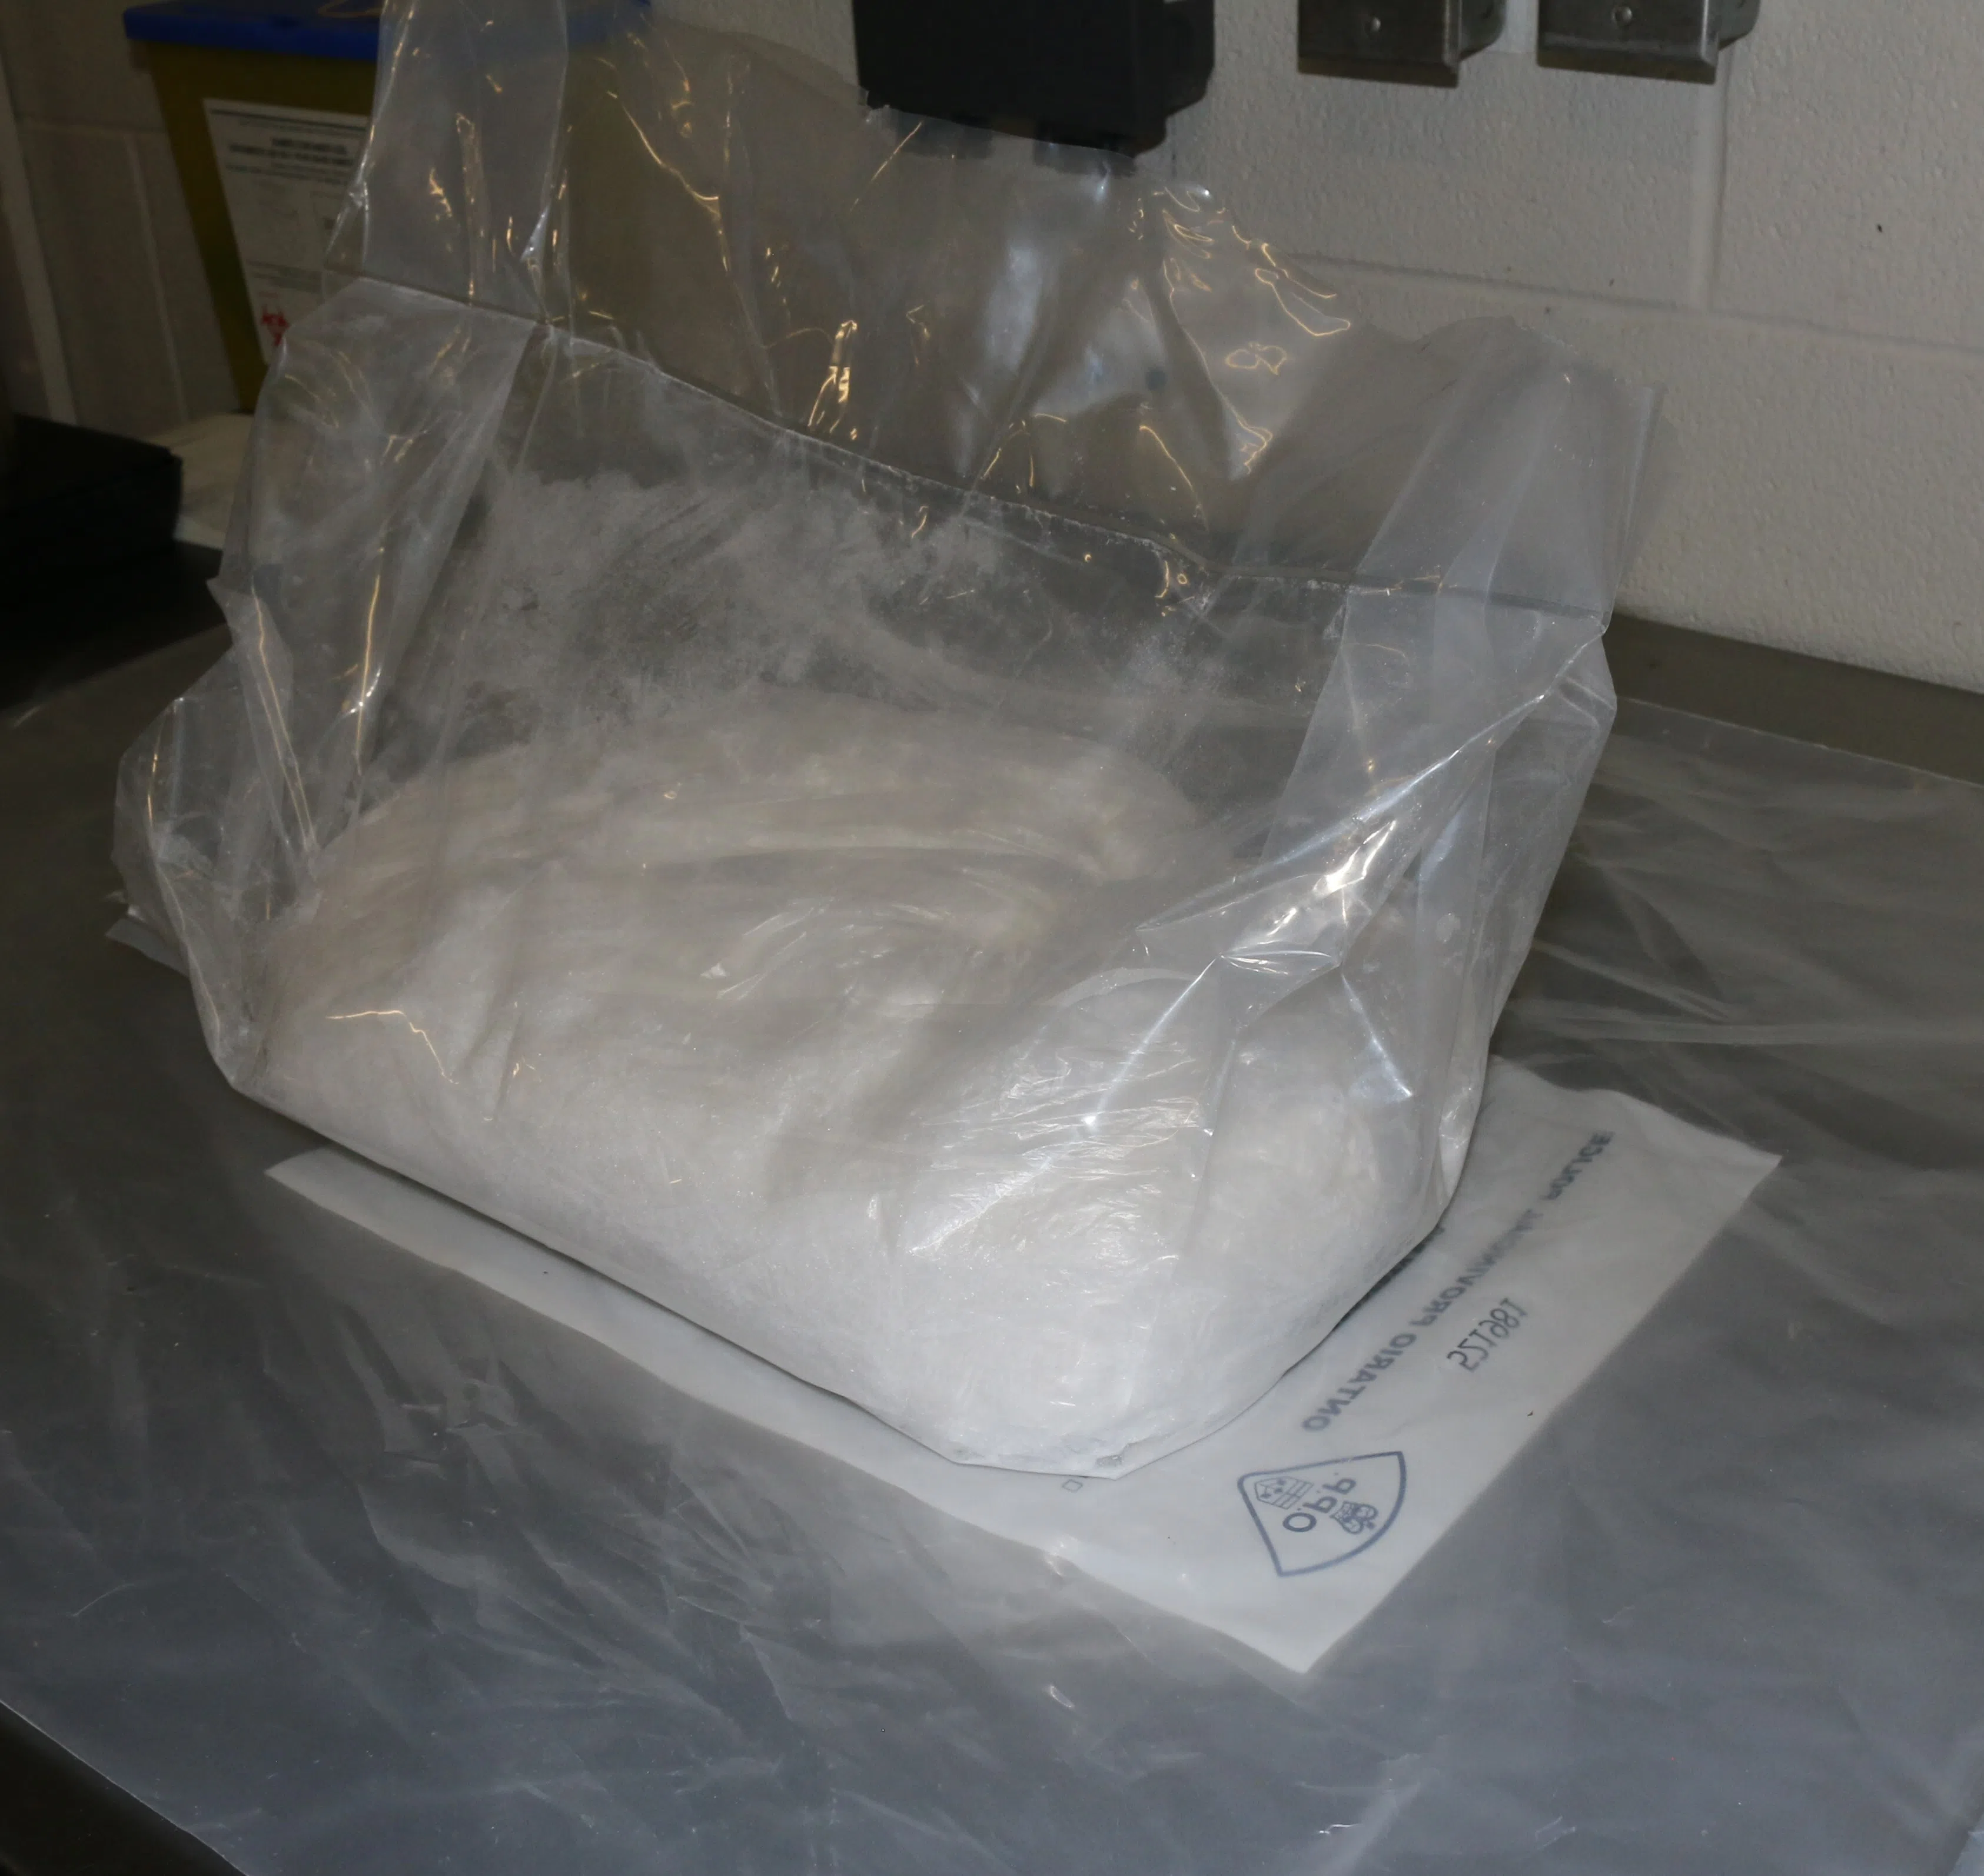 Drug Charges Laid Following Seizure Of Six Kilograms Of Ketamine